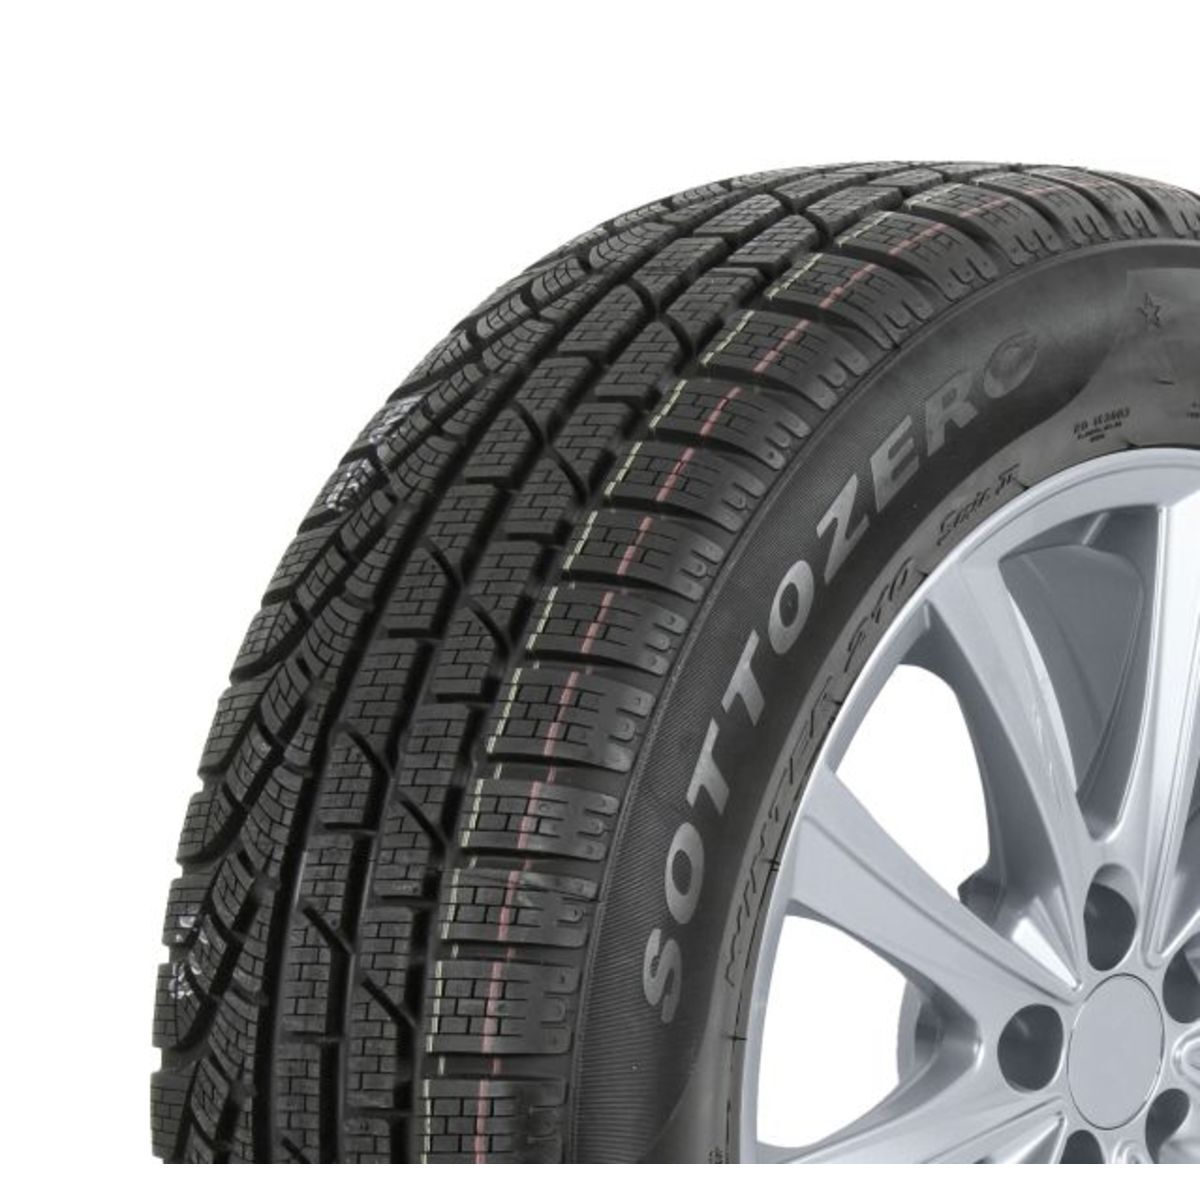 Neumáticos de invierno PIRELLI SottoZero serie II 225/50R16 XL 96V